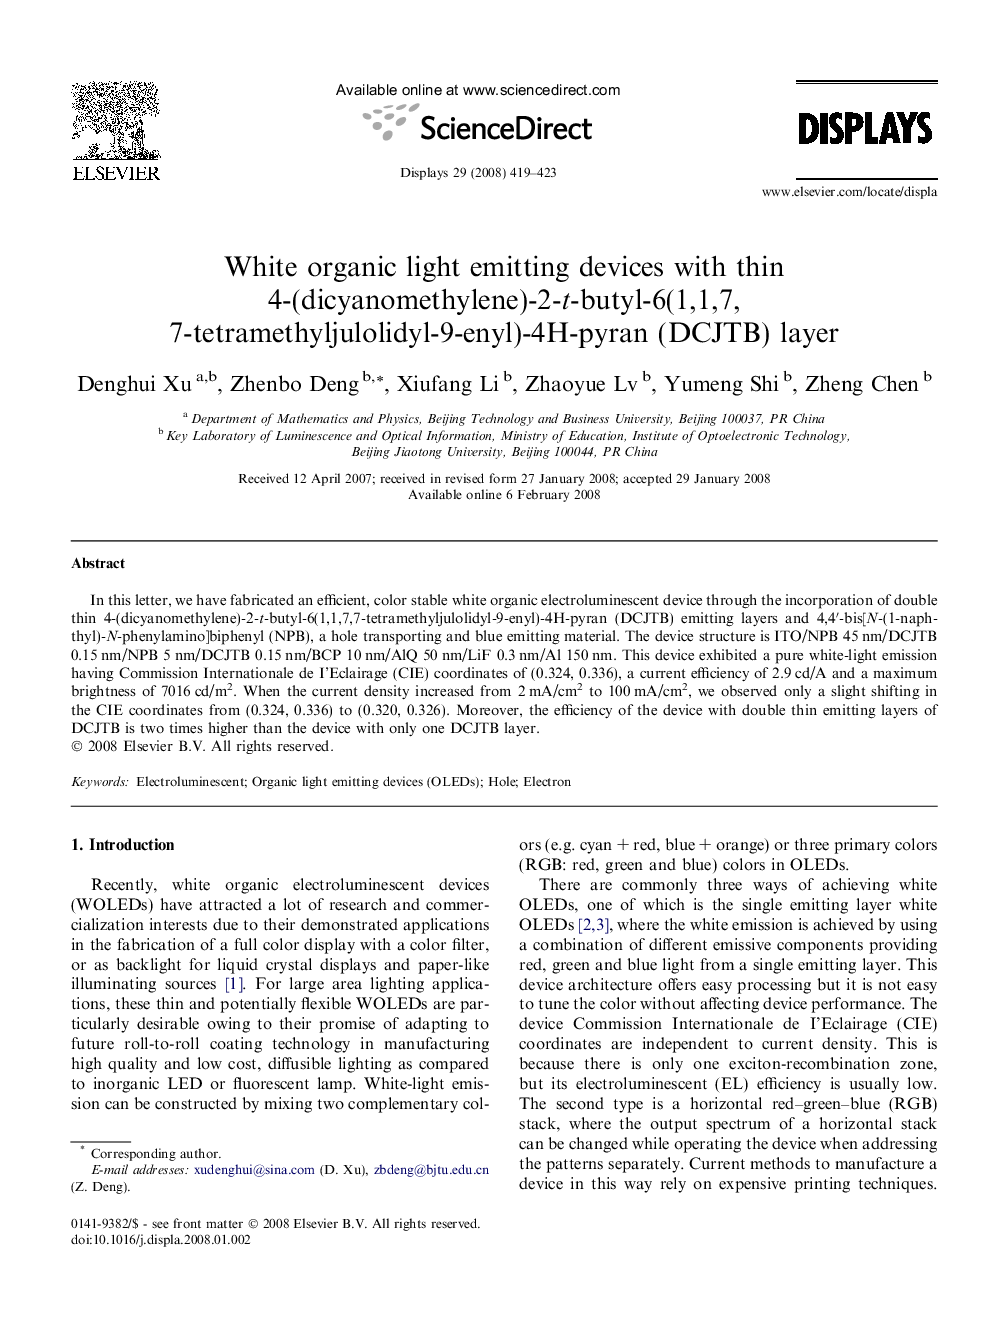 White organic light emitting devices with thin 4-(dicyanomethylene)-2-t-butyl-6(1,1,7,7-tetramethyljulolidyl-9-enyl)-4H-pyran (DCJTB) layer